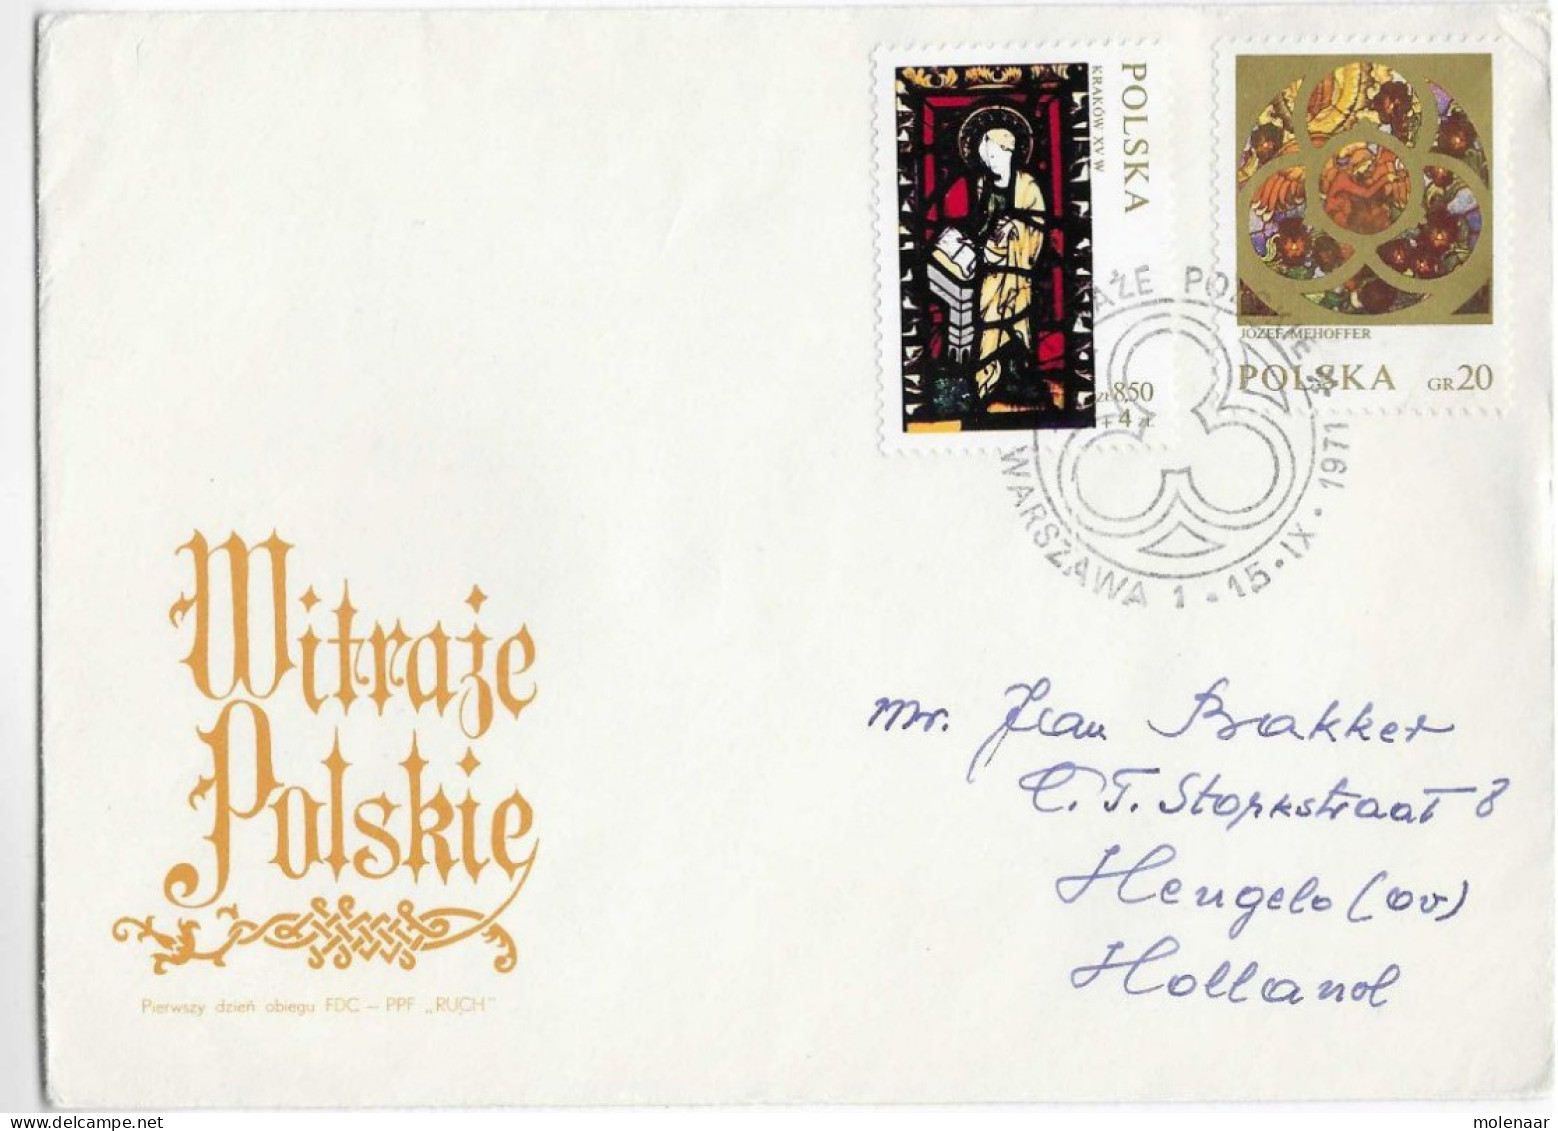 Postzegels > Europa > Polen > 1944-.... Republiek > 1971-80 >brief Me No. 2105 (17111) - Covers & Documents